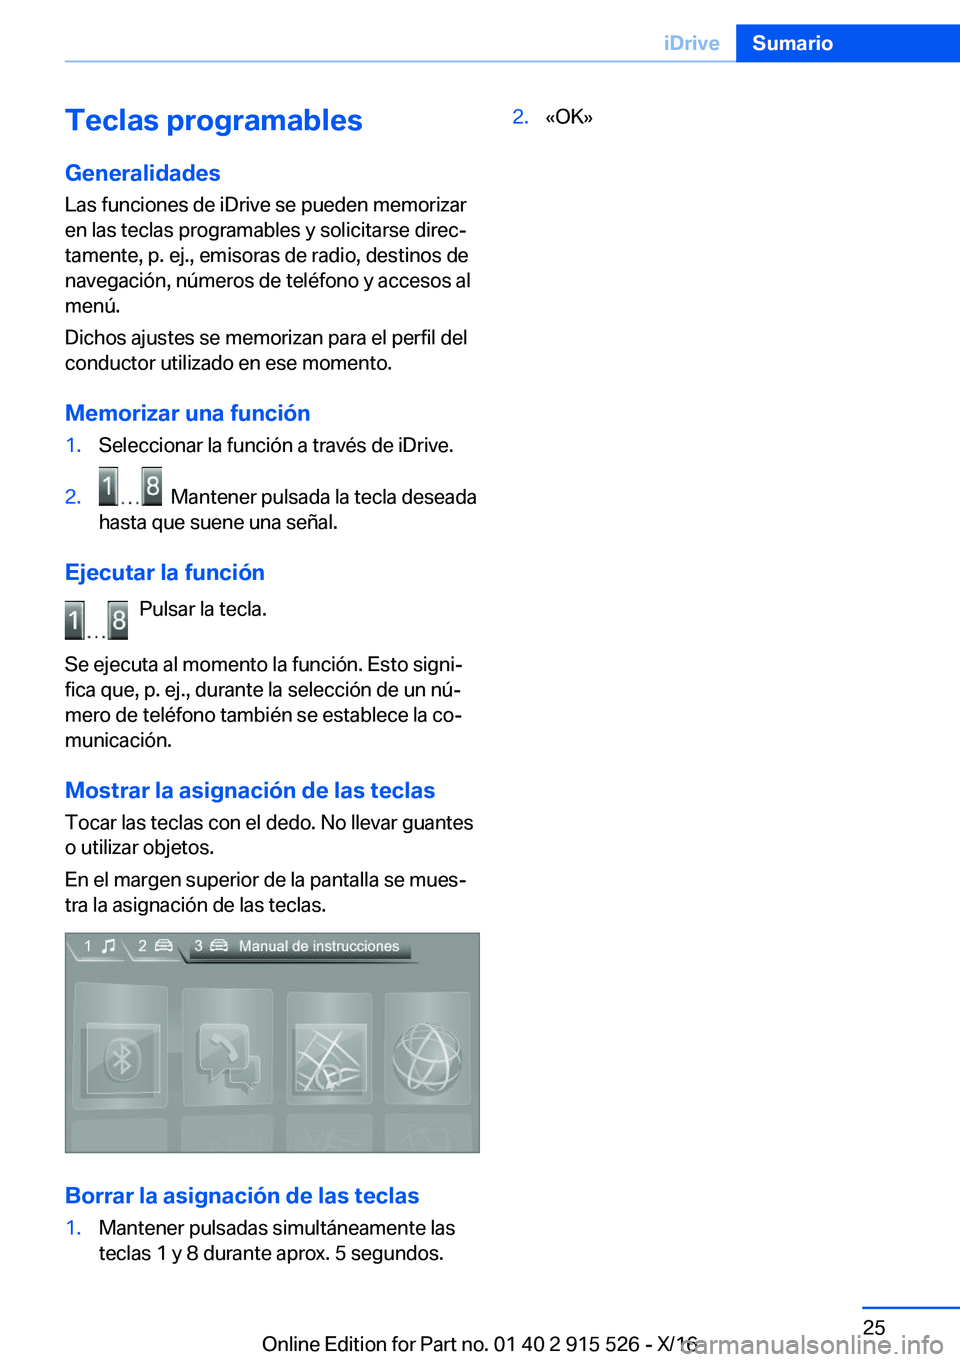 BMW X5 2017  Manuales de Empleo (in Spanish) �T�e�c�l�a�s��p�r�o�g�r�a�m�a�b�l�e�s�G�e�n�e�r�a�l�i�d�a�d�e�s
�L�a�s� �f�u�n�c�i�o�n�e�s� �d�e� �i�D�r�i�v�e� �s�e� �p�u�e�d�e�n� �m�e�m�o�r�i�z�a�r �e�n� �l�a�s� �t�e�c�l�a�s� �p�r�o�g�r�a�m�a�b�l